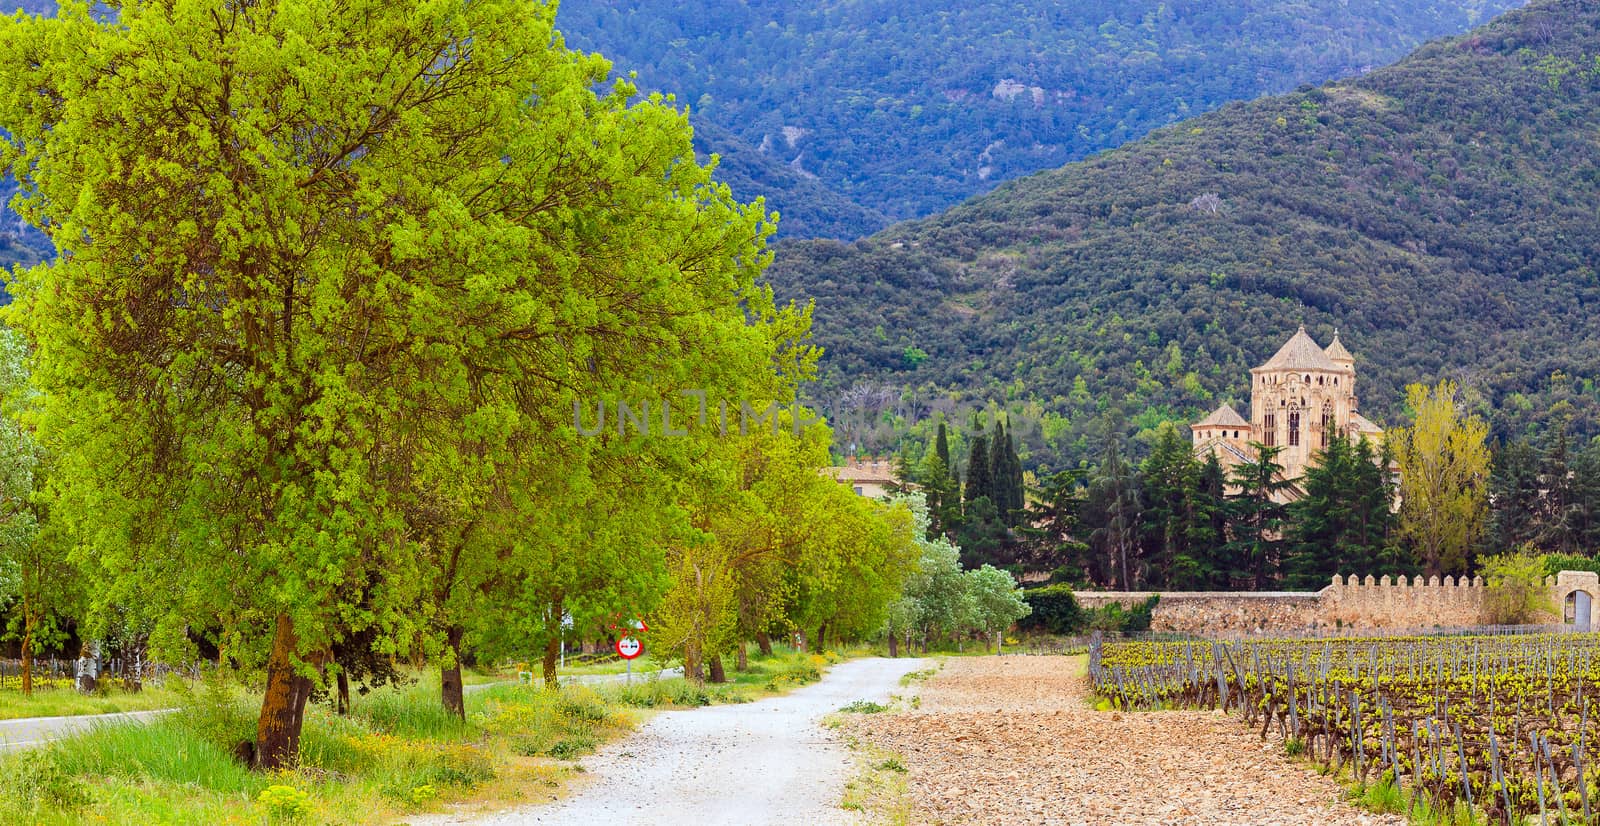 Road to the Santa Maria de Poblet cloister, Spain